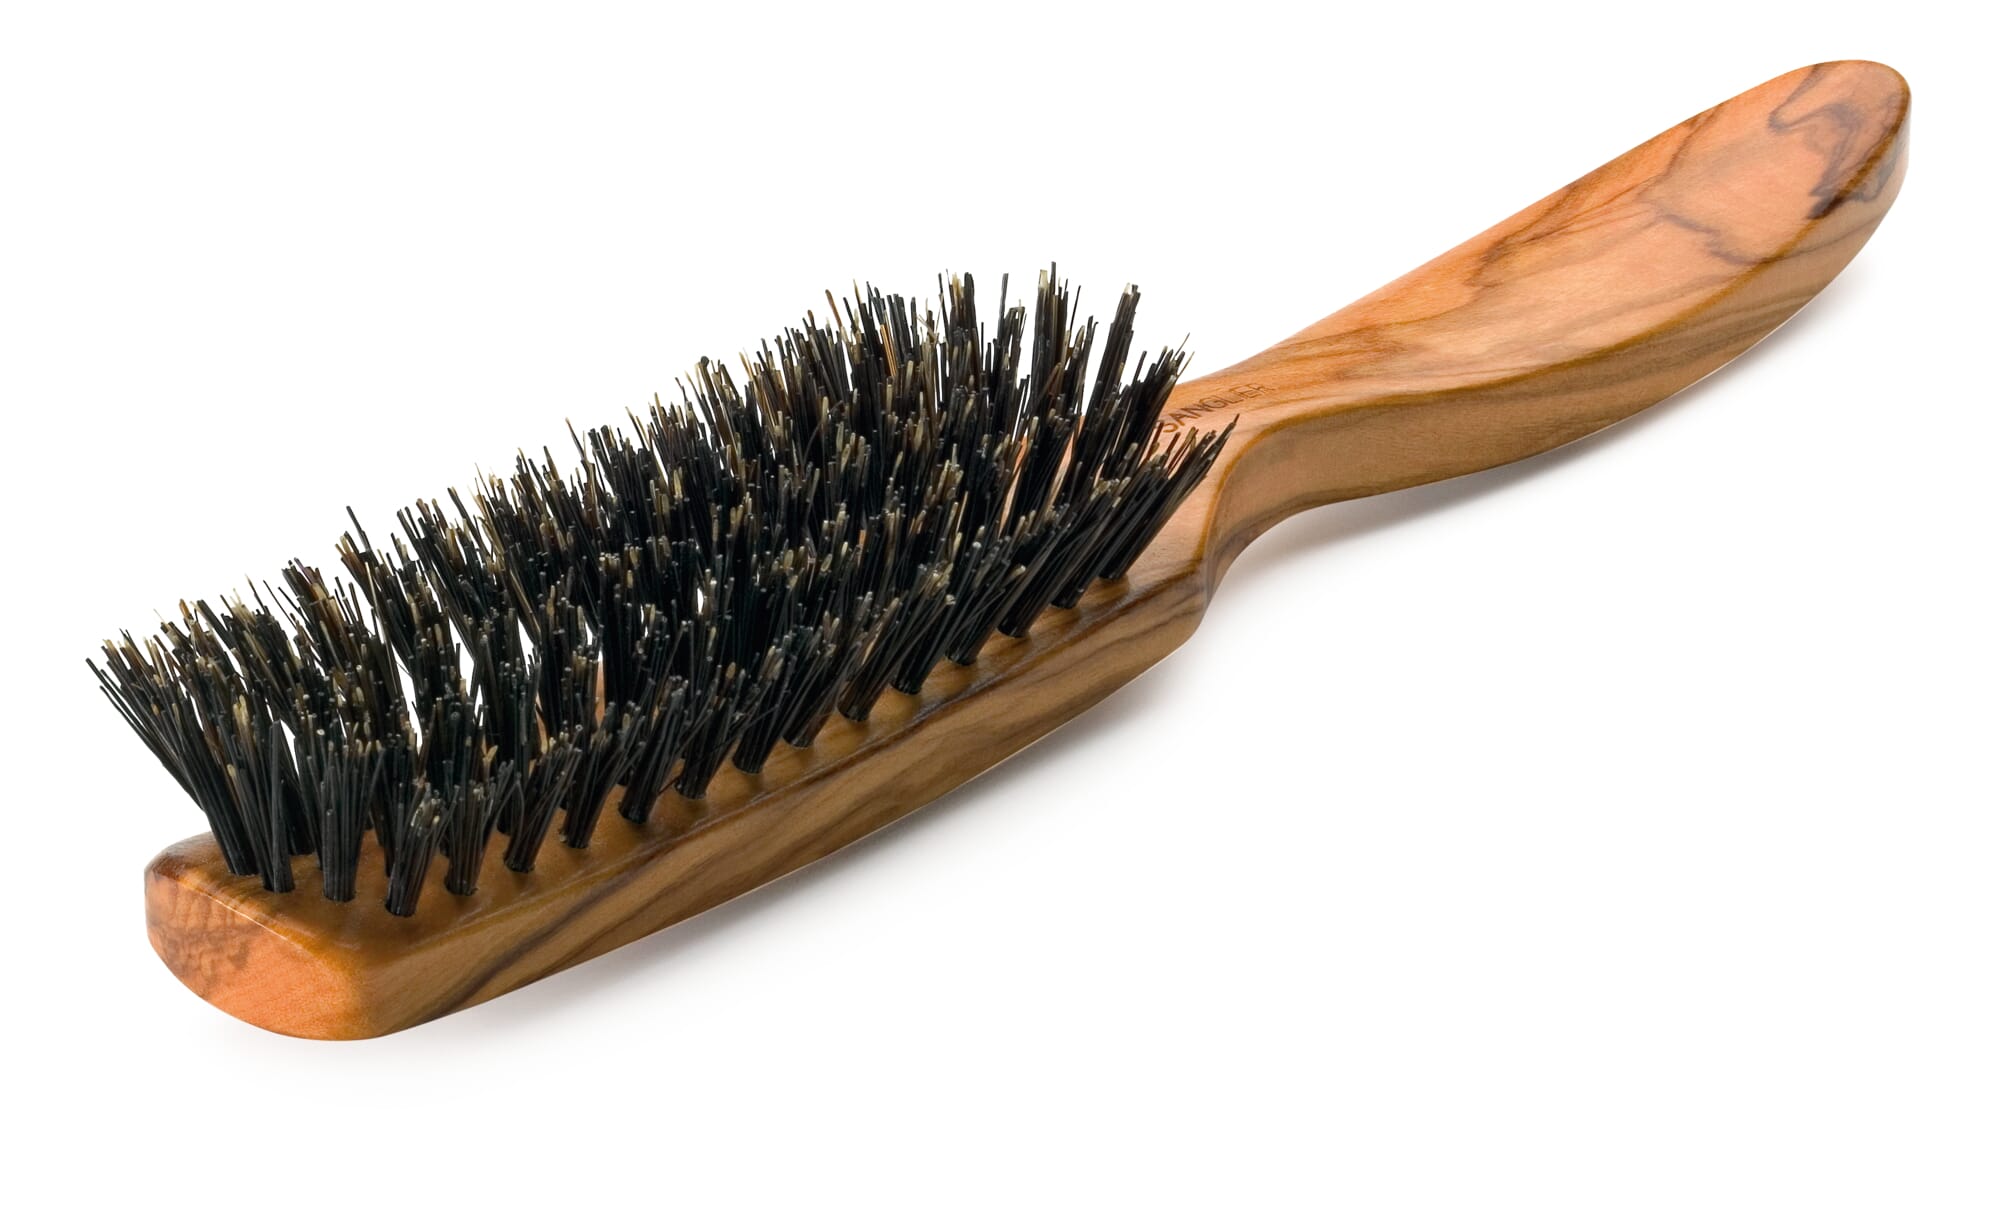 3 Simple Ways to Clean a Boar Bristle Hair Brush